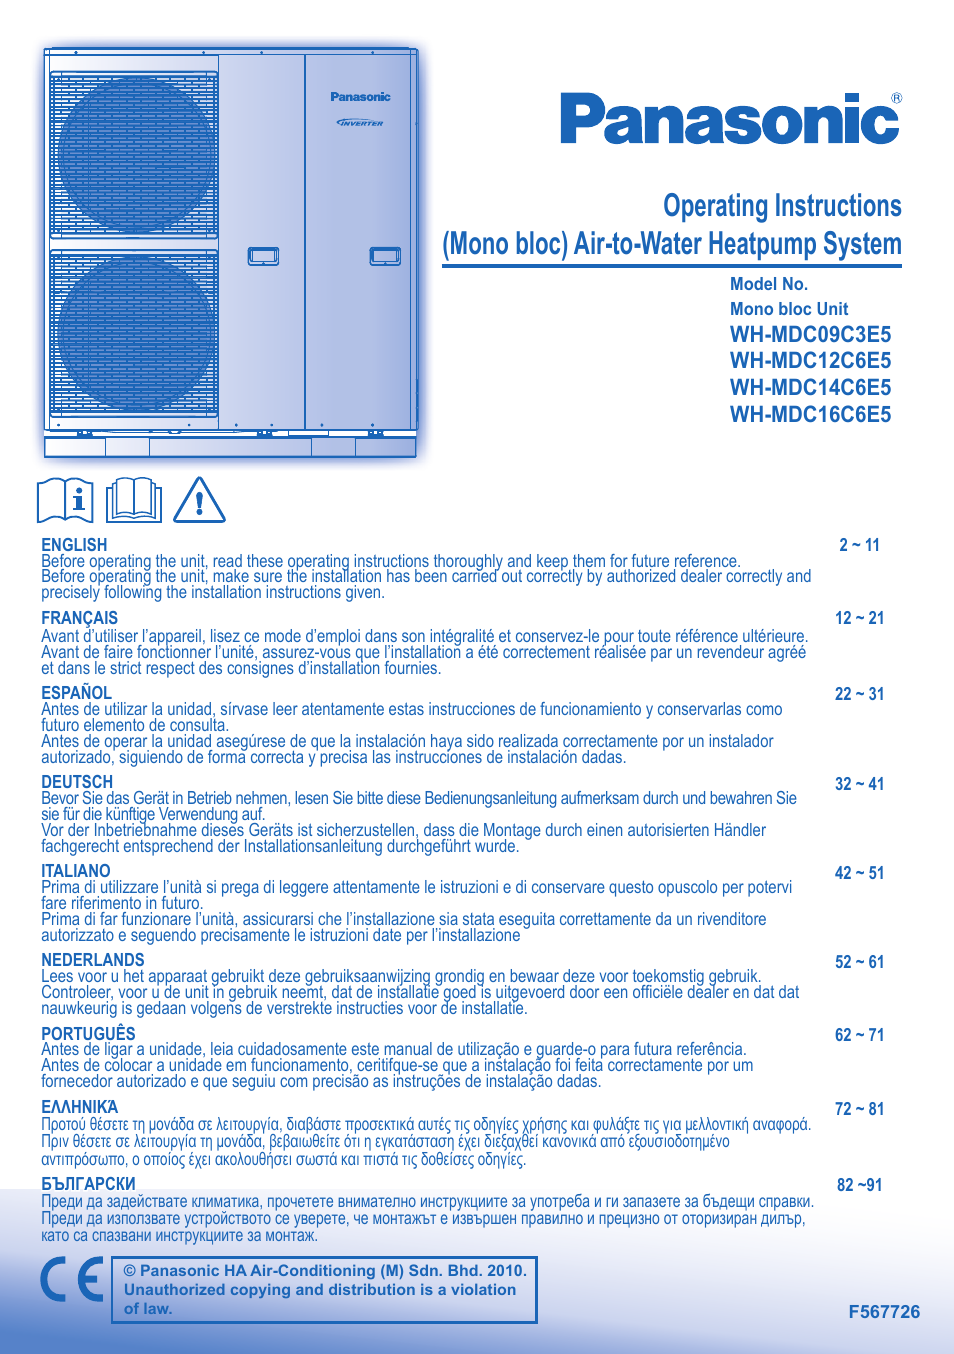 Panasonic WHMDC14C6E5 Manuale d'uso | Pagine: 12